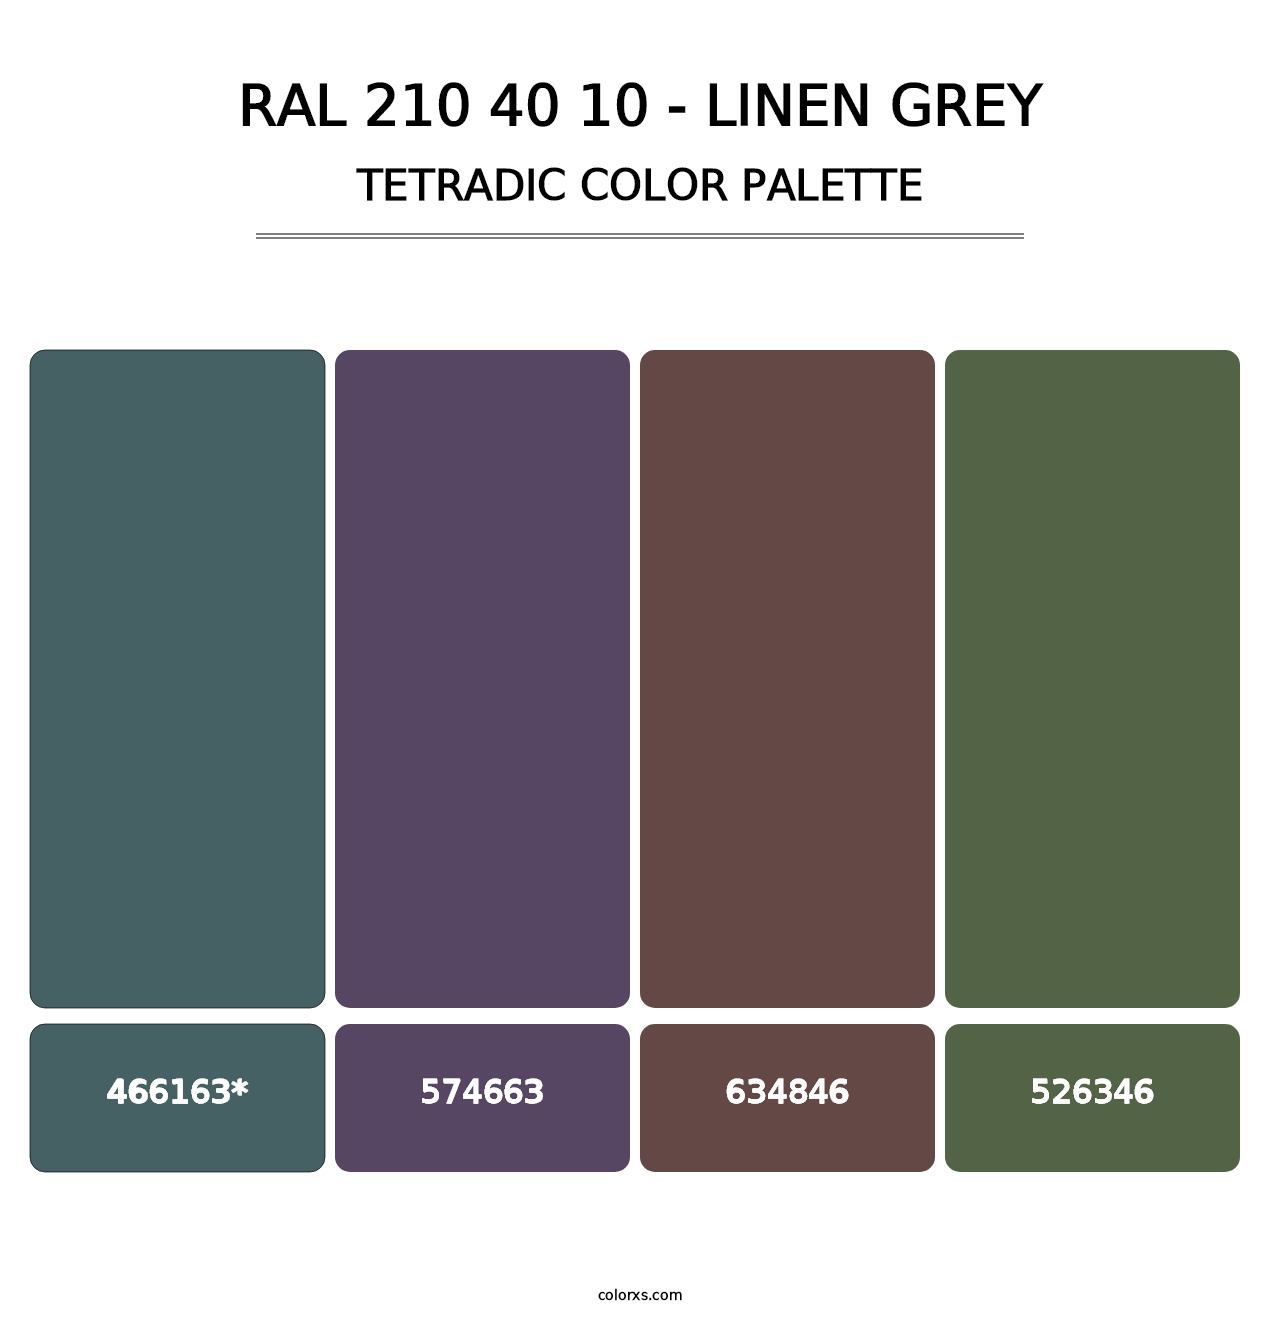 RAL 210 40 10 - Linen Grey - Tetradic Color Palette